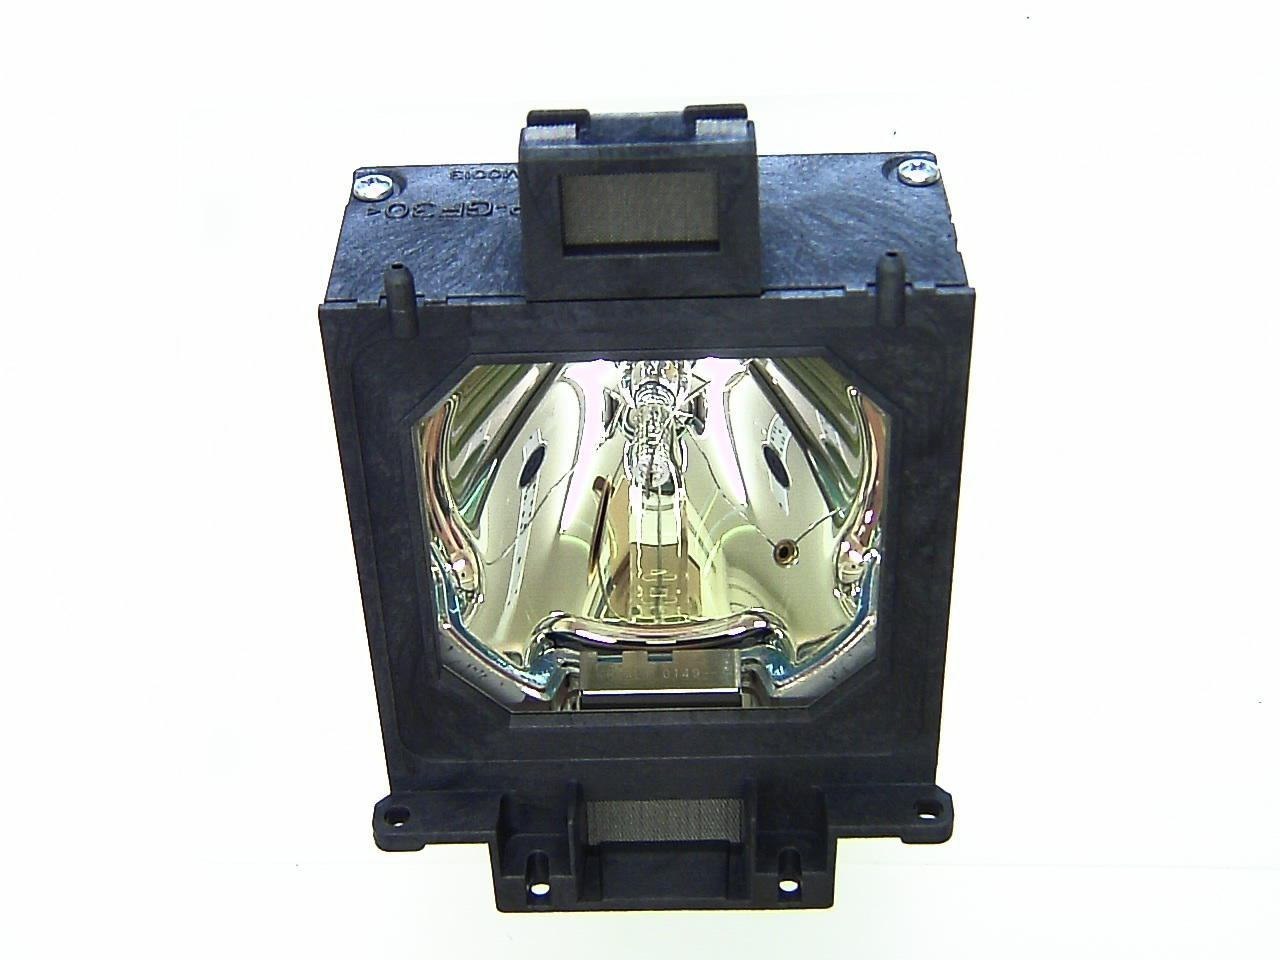 Sanyo Poa-Lmp125 Projector Lamp 330 W NSH (Original Lamp For Sanyo Plc-Wtc500l:Plc-Xtc50l:Plc-Xc55a Projector [3Months Warranty])